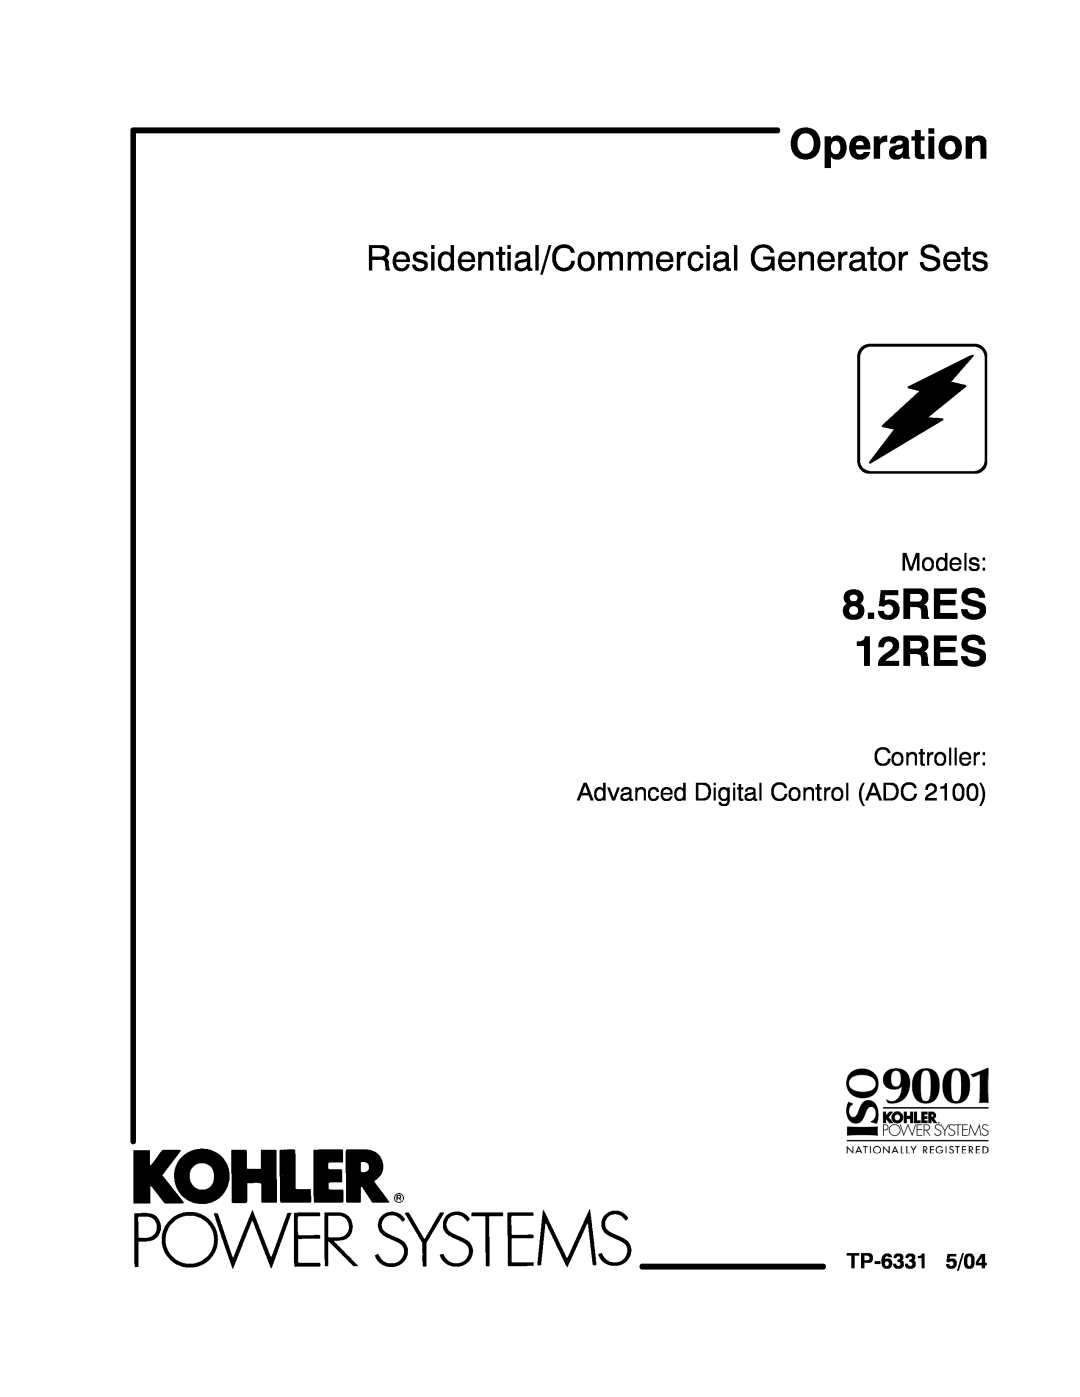 Kohler manual Models, Controller Advanced Digital Control ADC, TP-63315/04, Operation, 8.5RES 12RES 